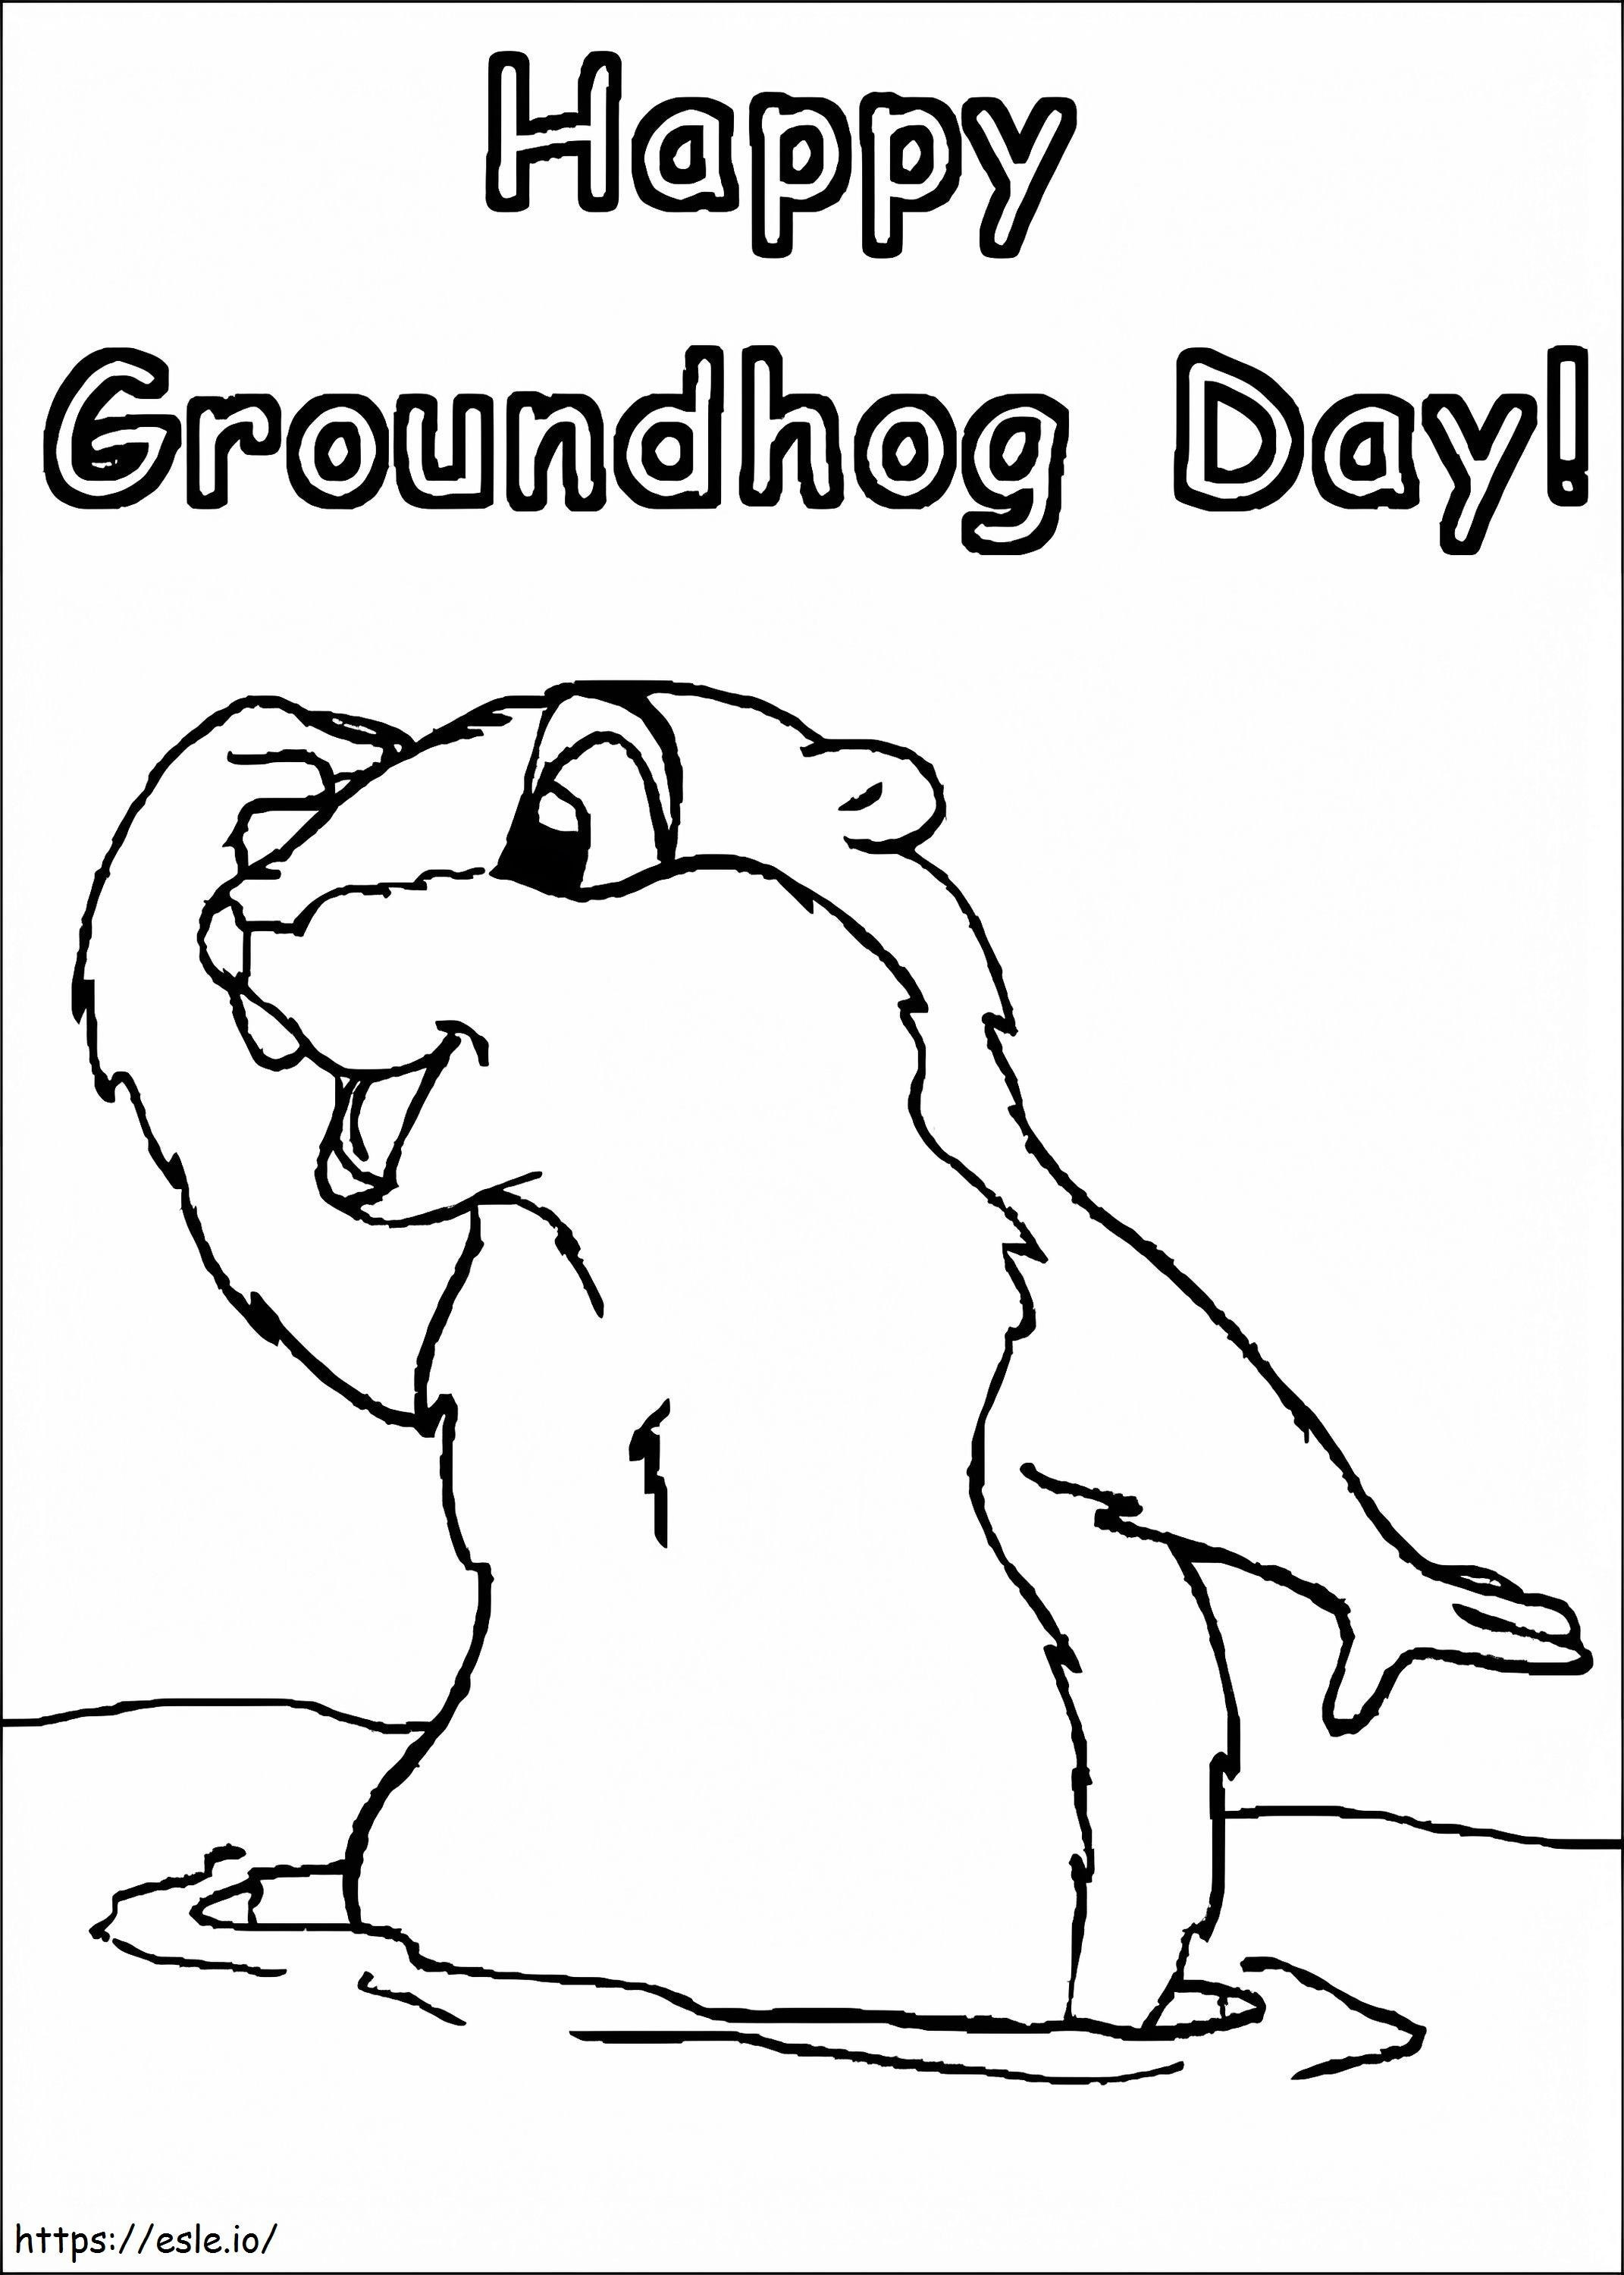 Groundhog 7. Gün boyama